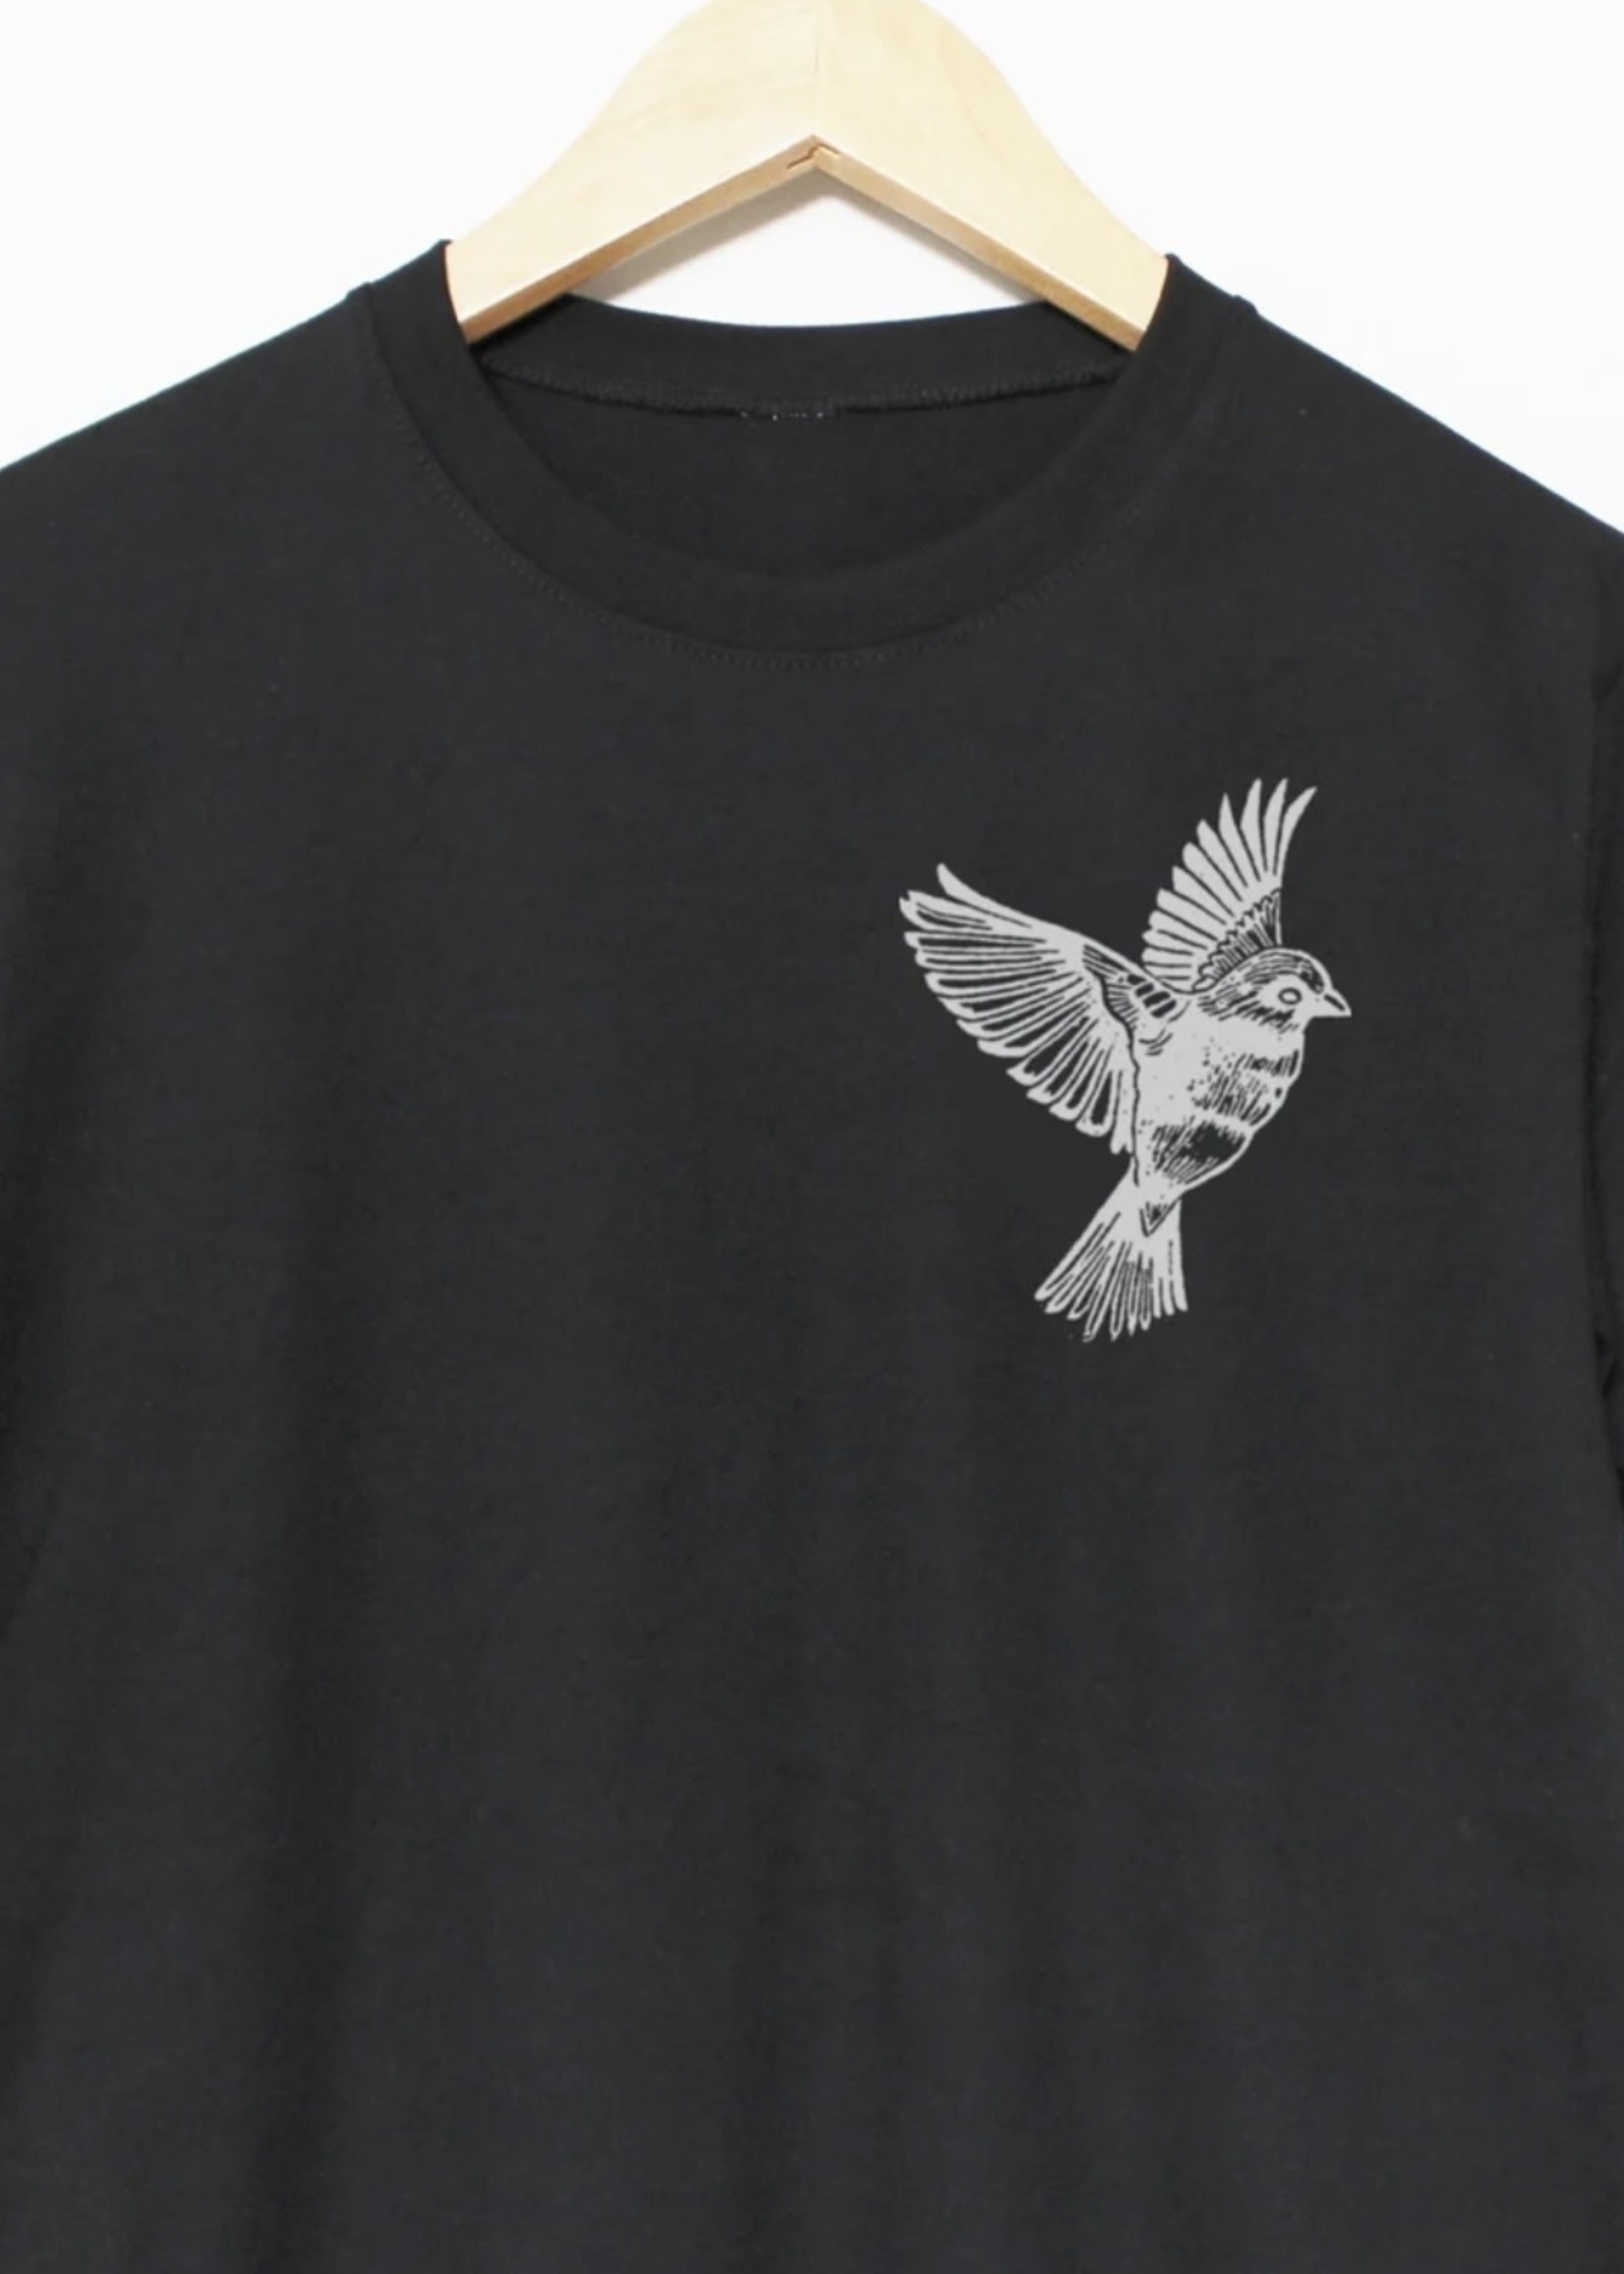 M.E. image T-shirt Oiseau